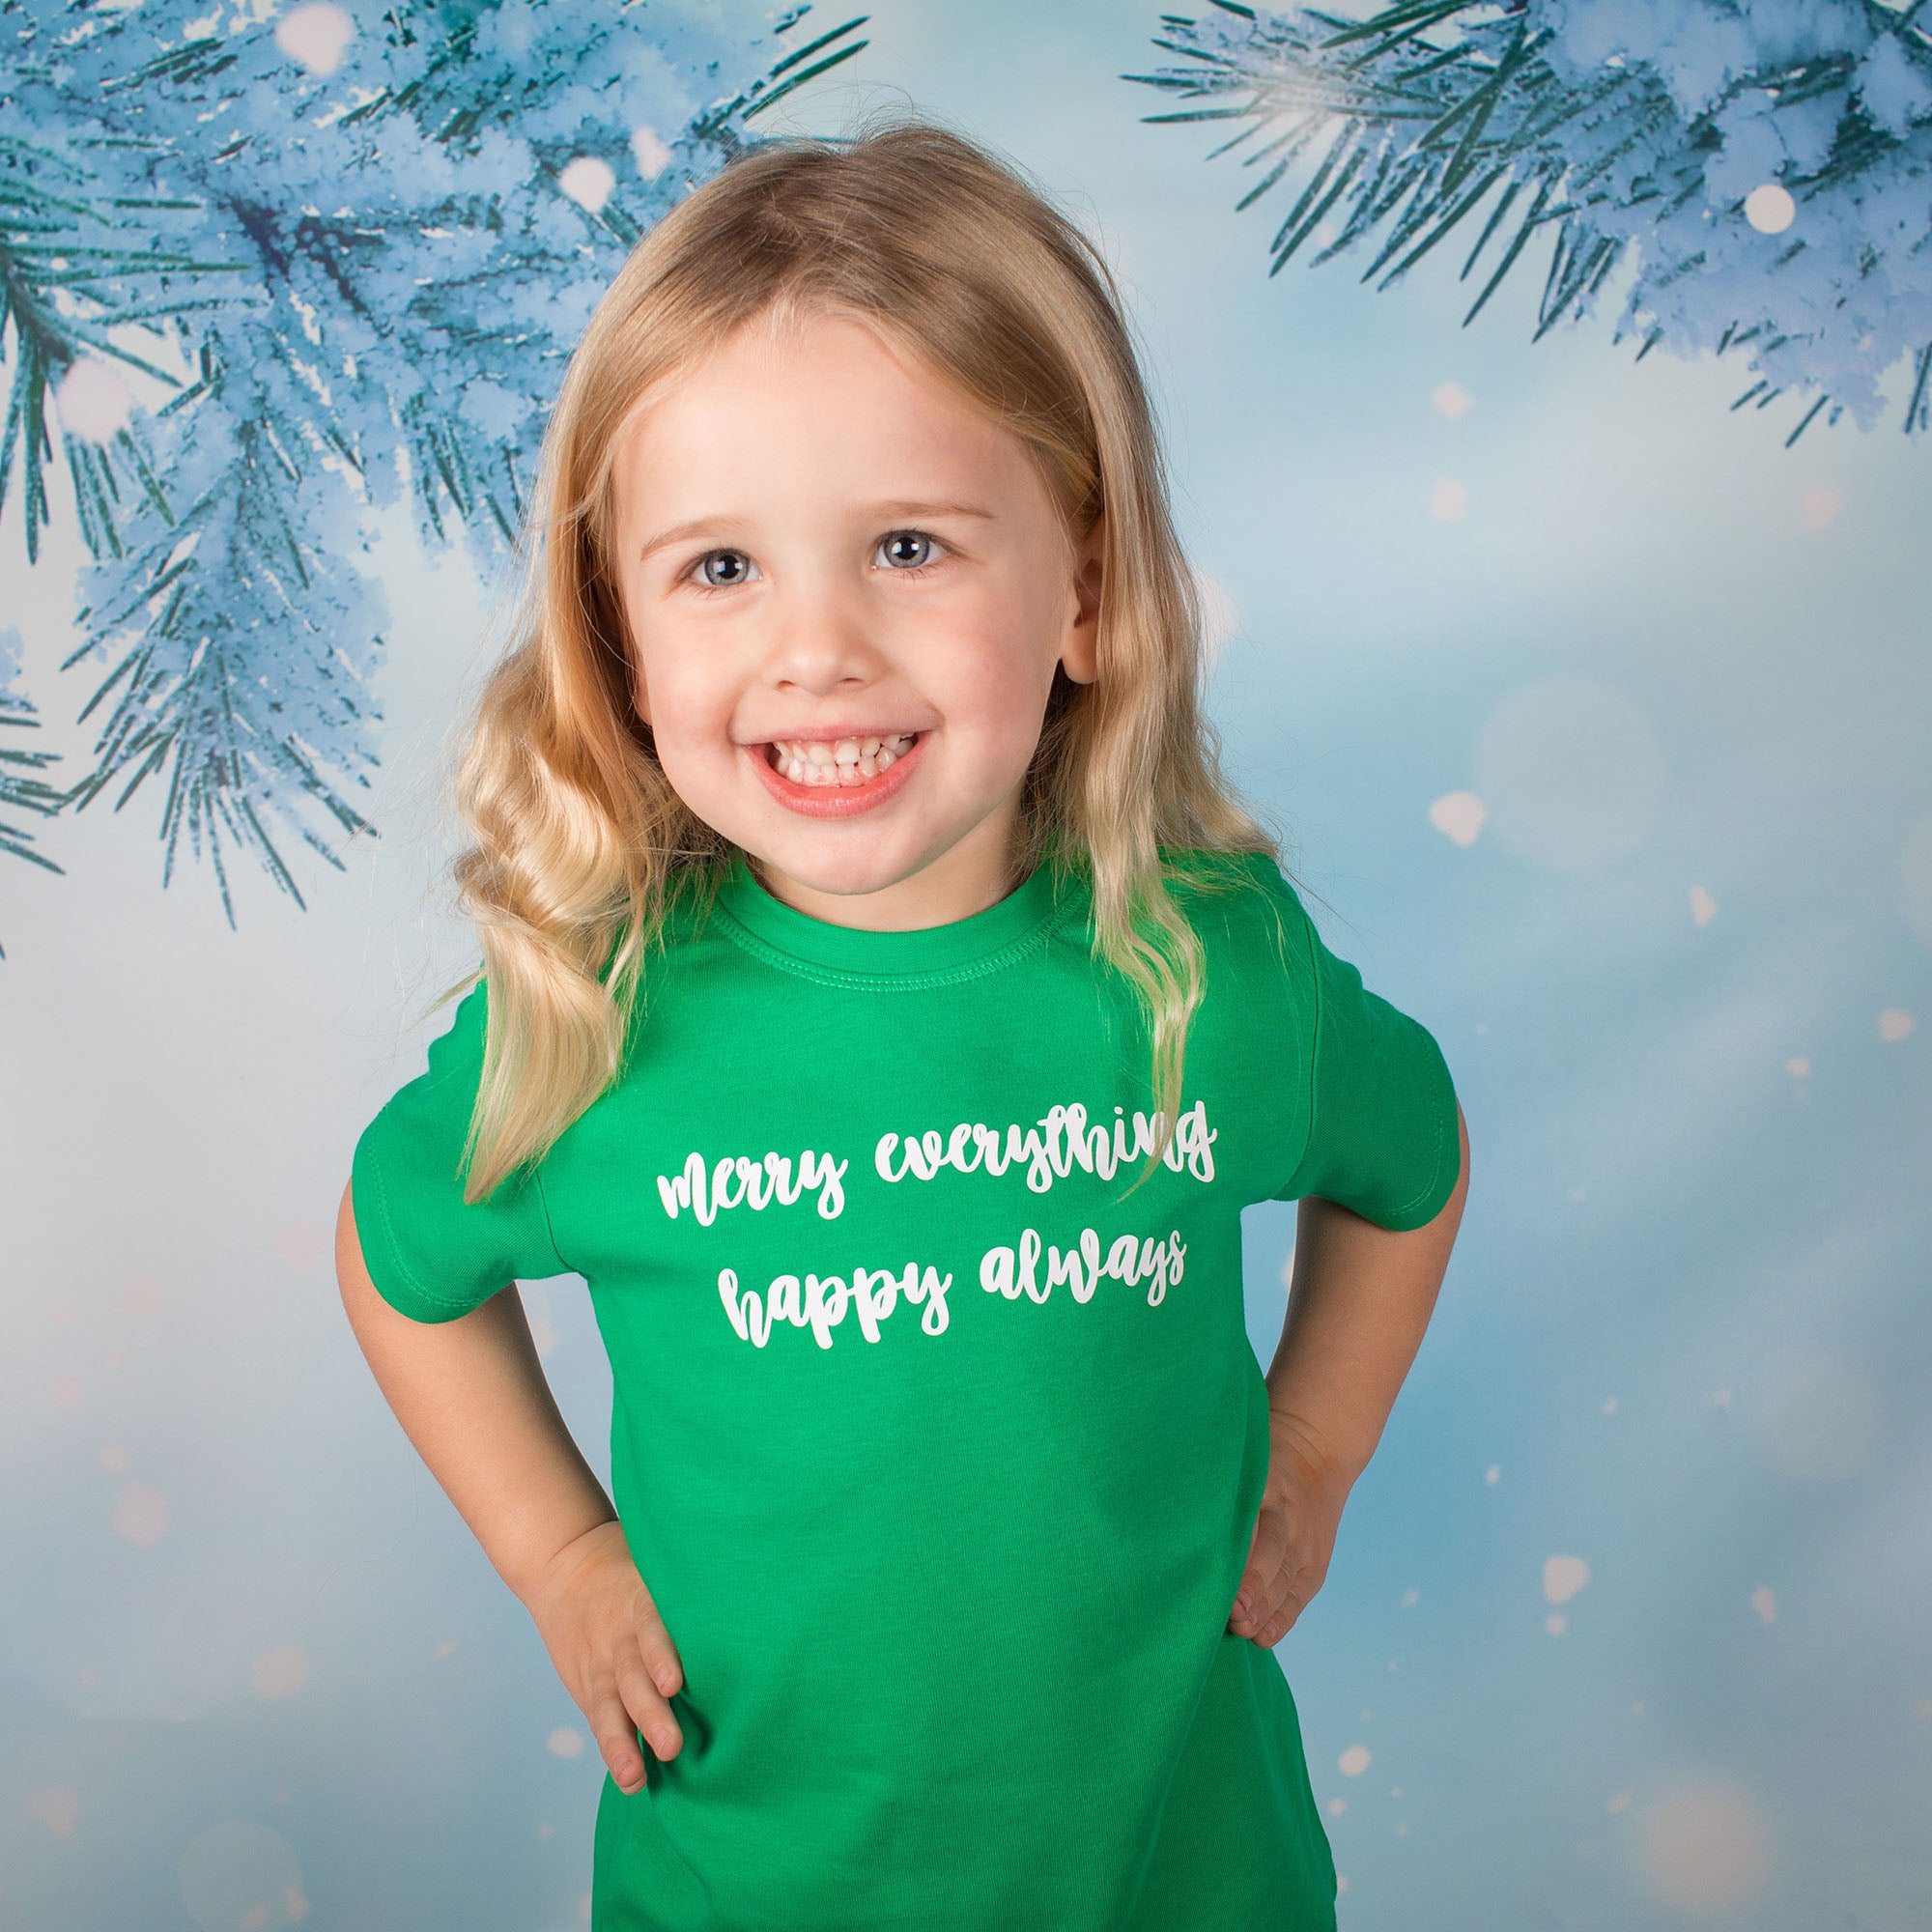 'Merry everything, Happy always' baby shortsleeve shirt